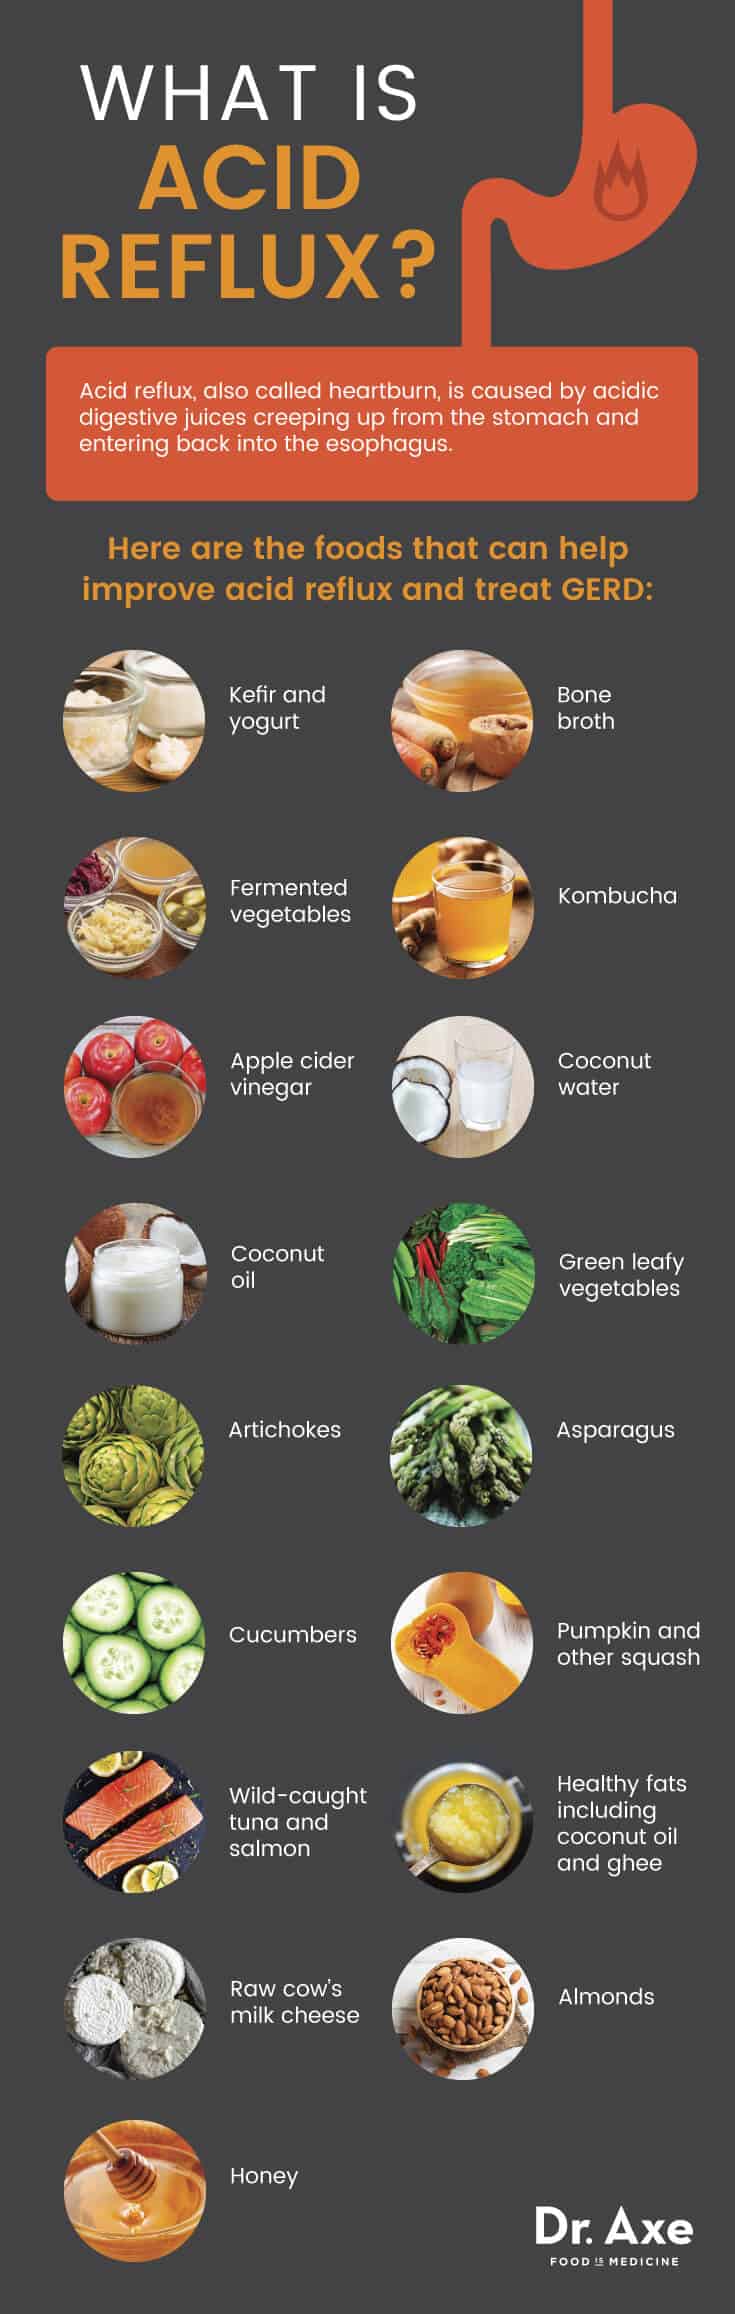 acid reflux diet: best & worst foods & supplements that help - dr. axe